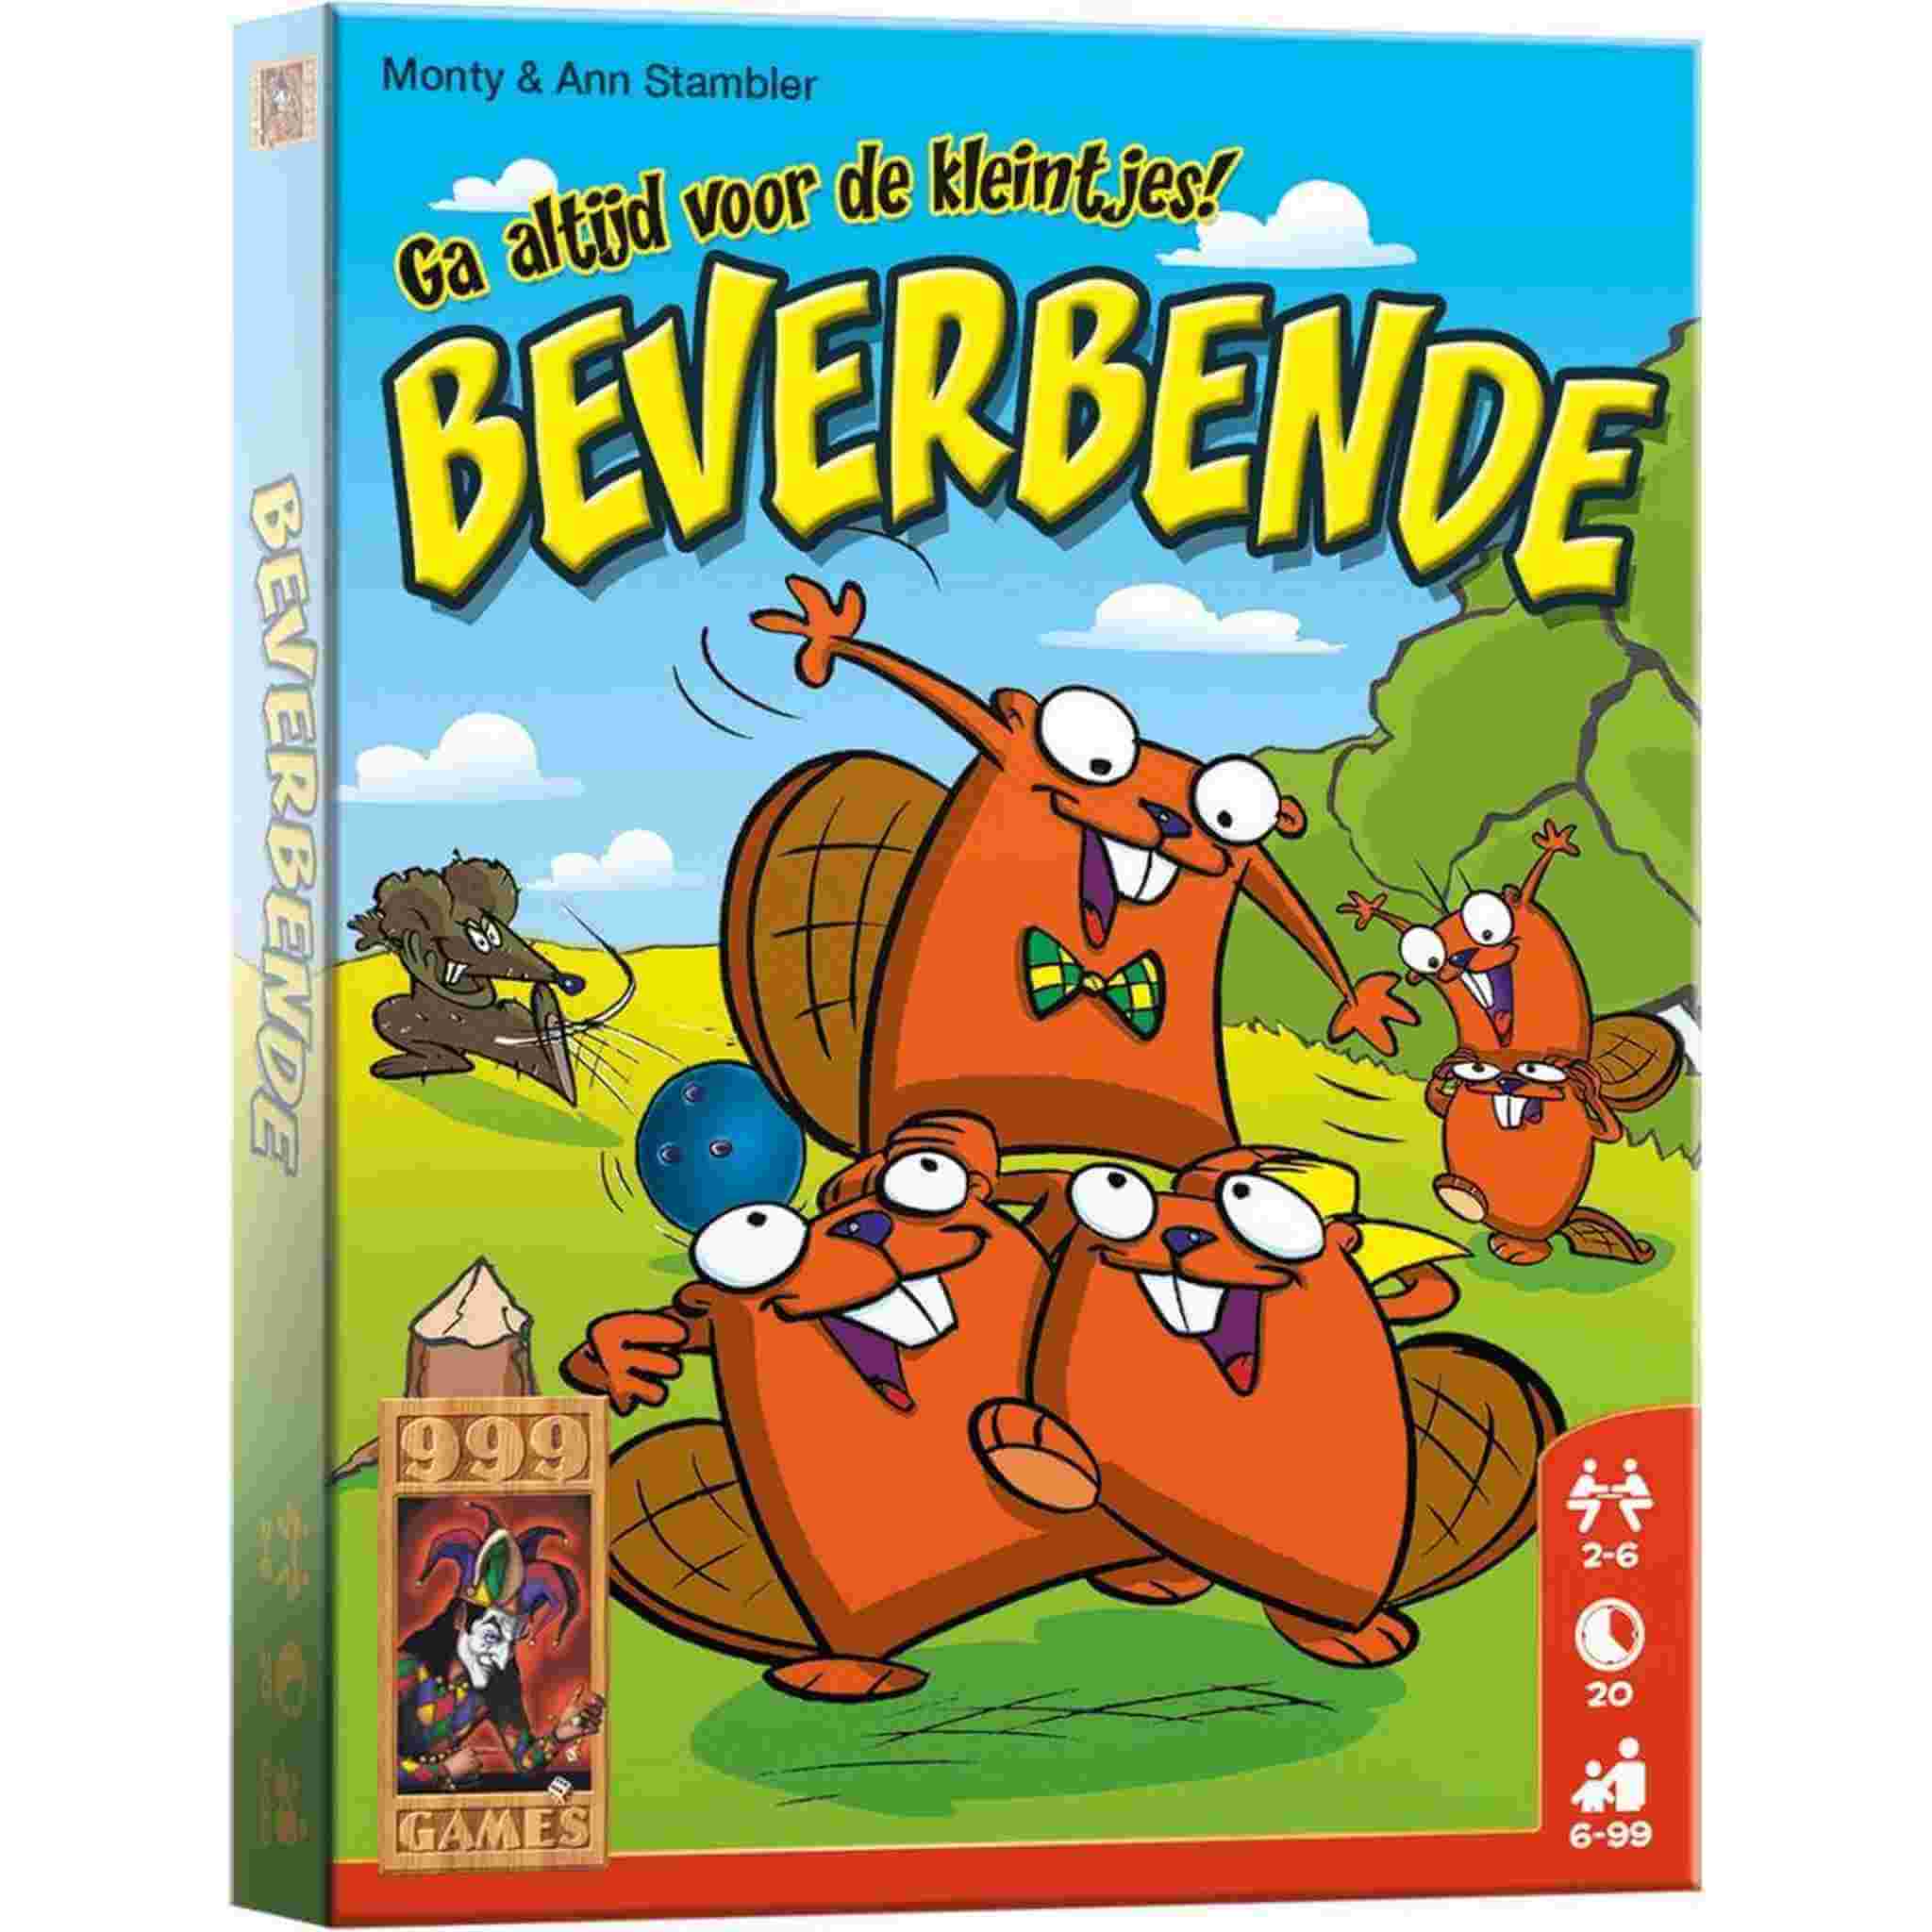 Asser verkoper genoeg Beverbende - 999-BEV01 - 999 Games | Speldorado